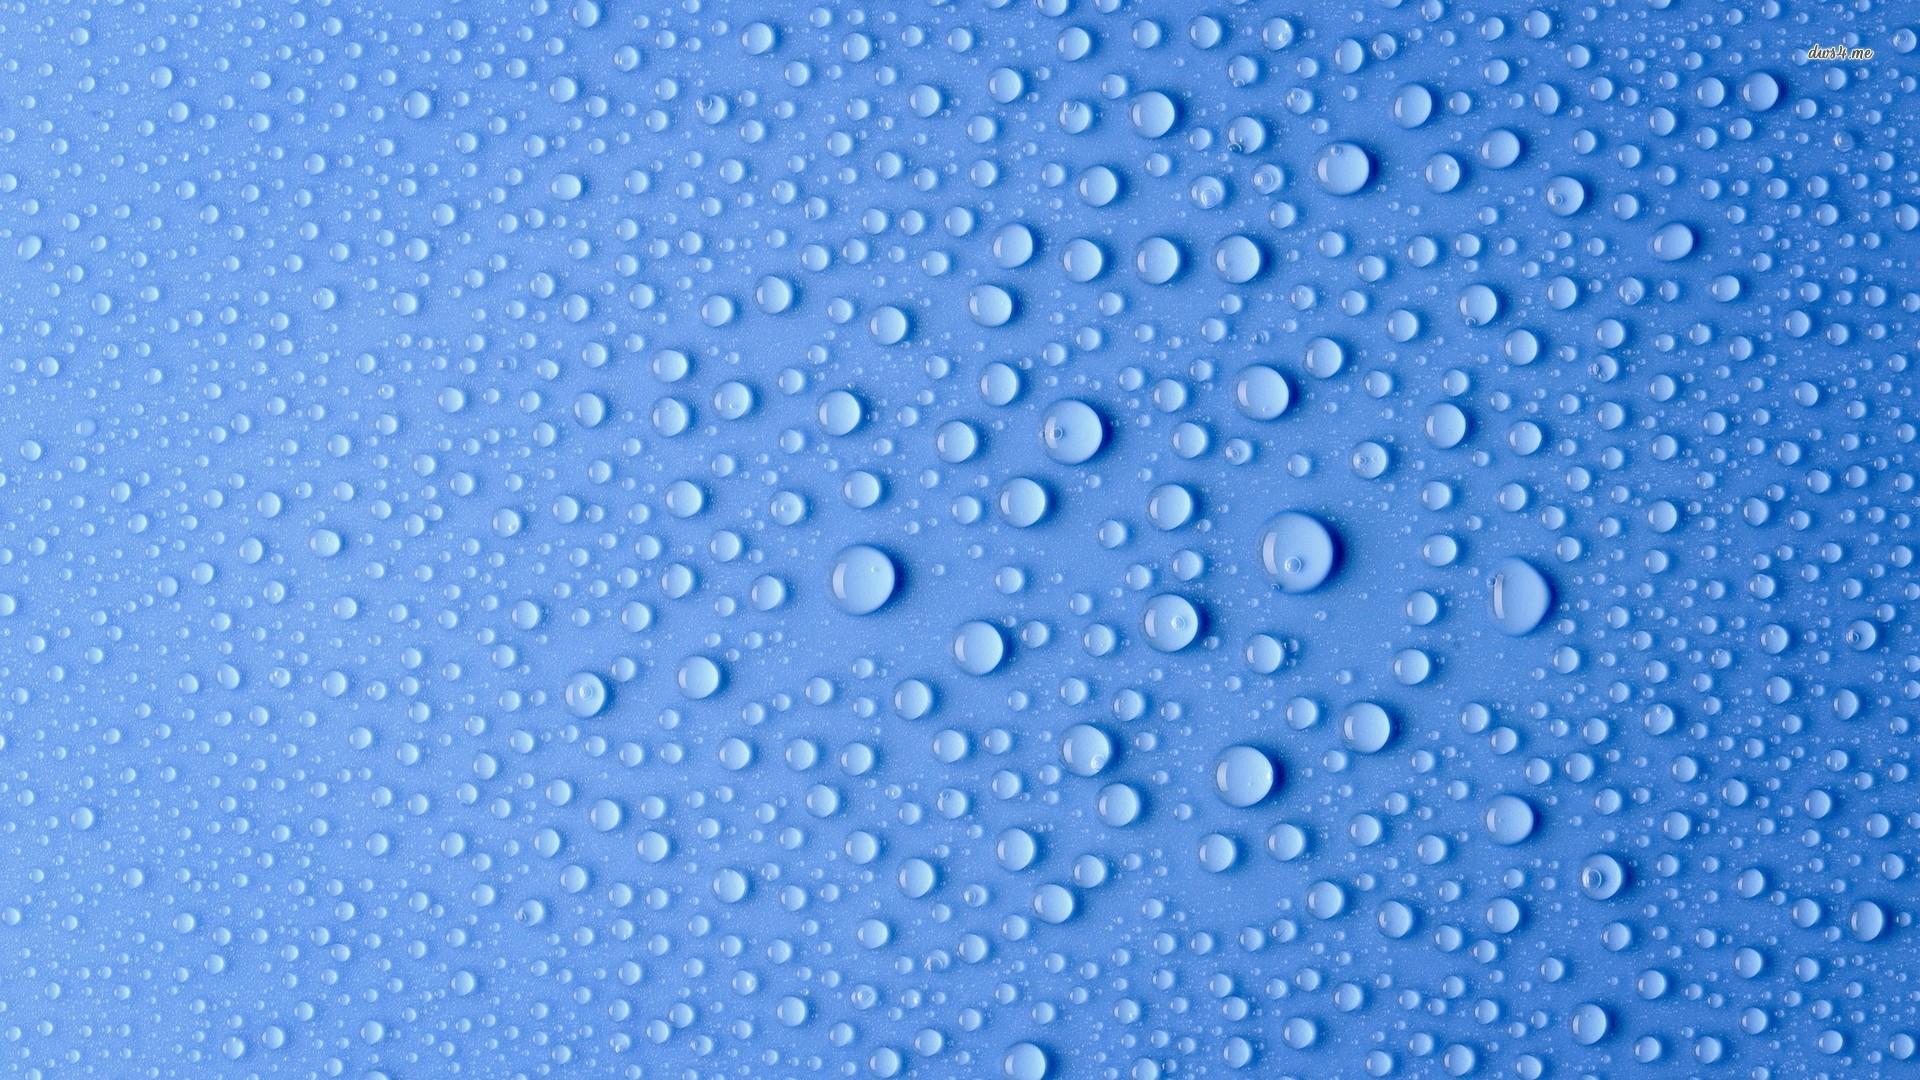 Water Drops Wallpaper 4K (1920x1080 px)